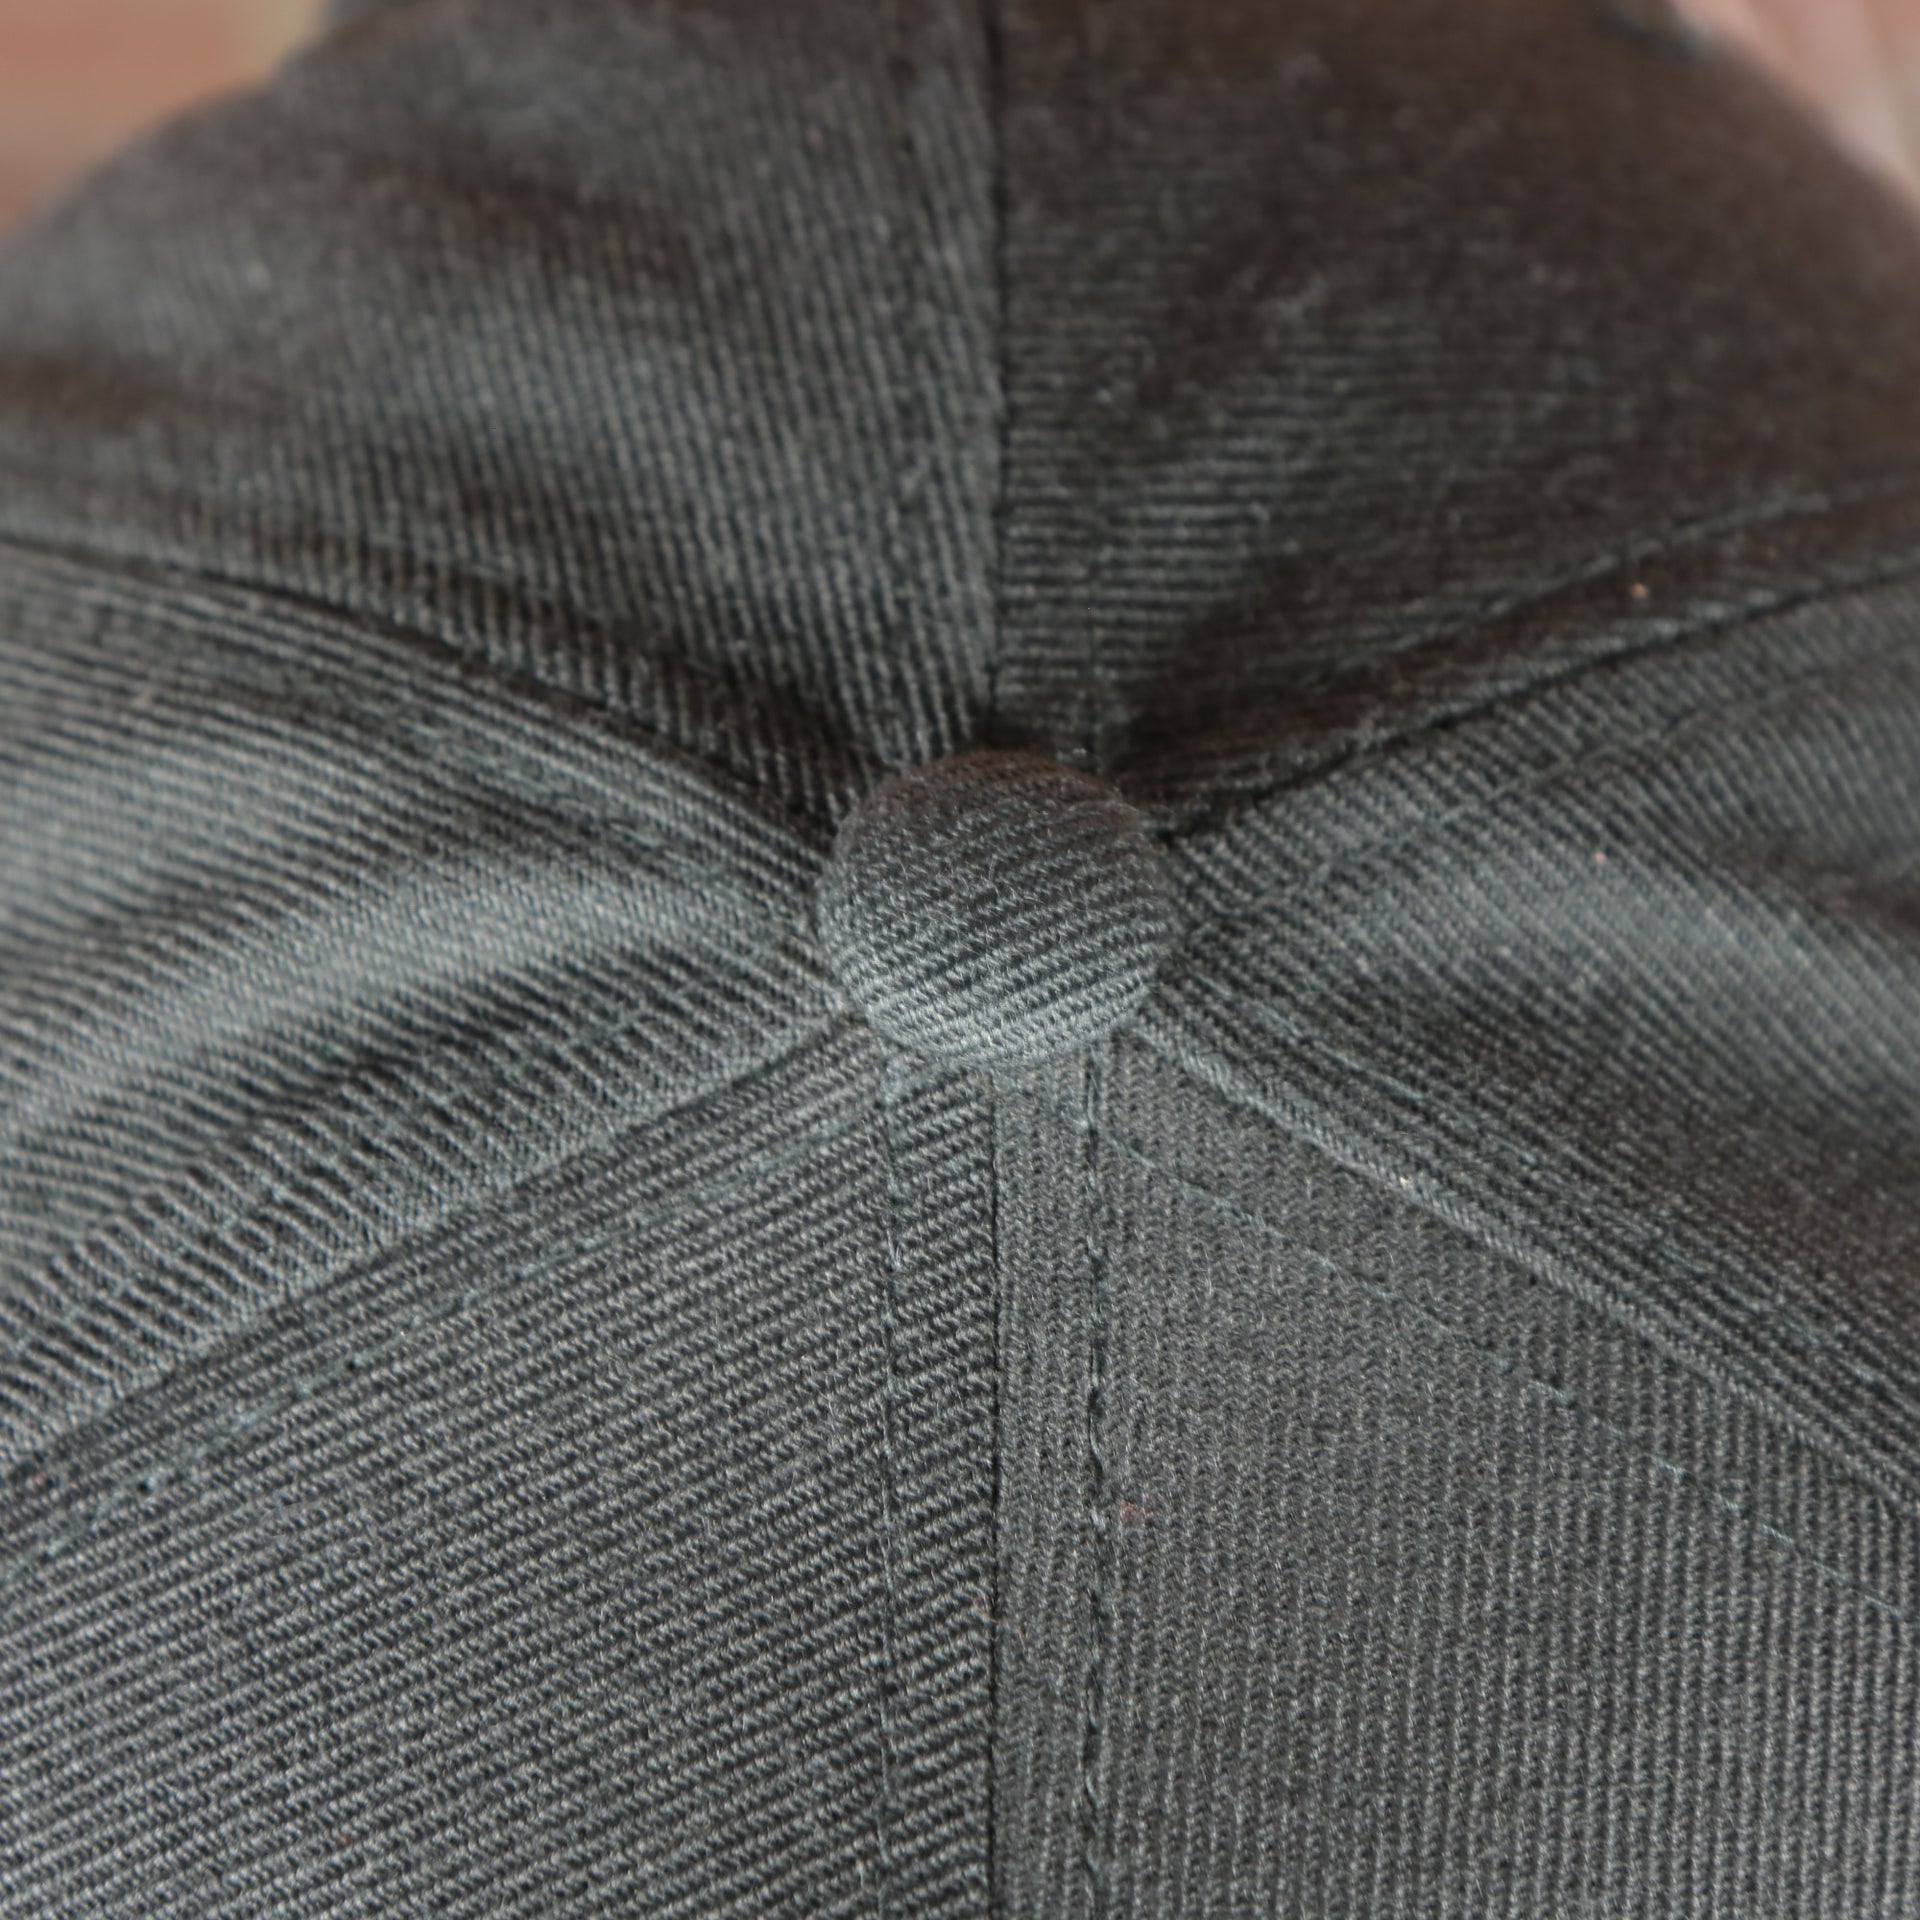 black button on the Washington Wizards XL Logo Black Mitchell and Ness Snapback Hat